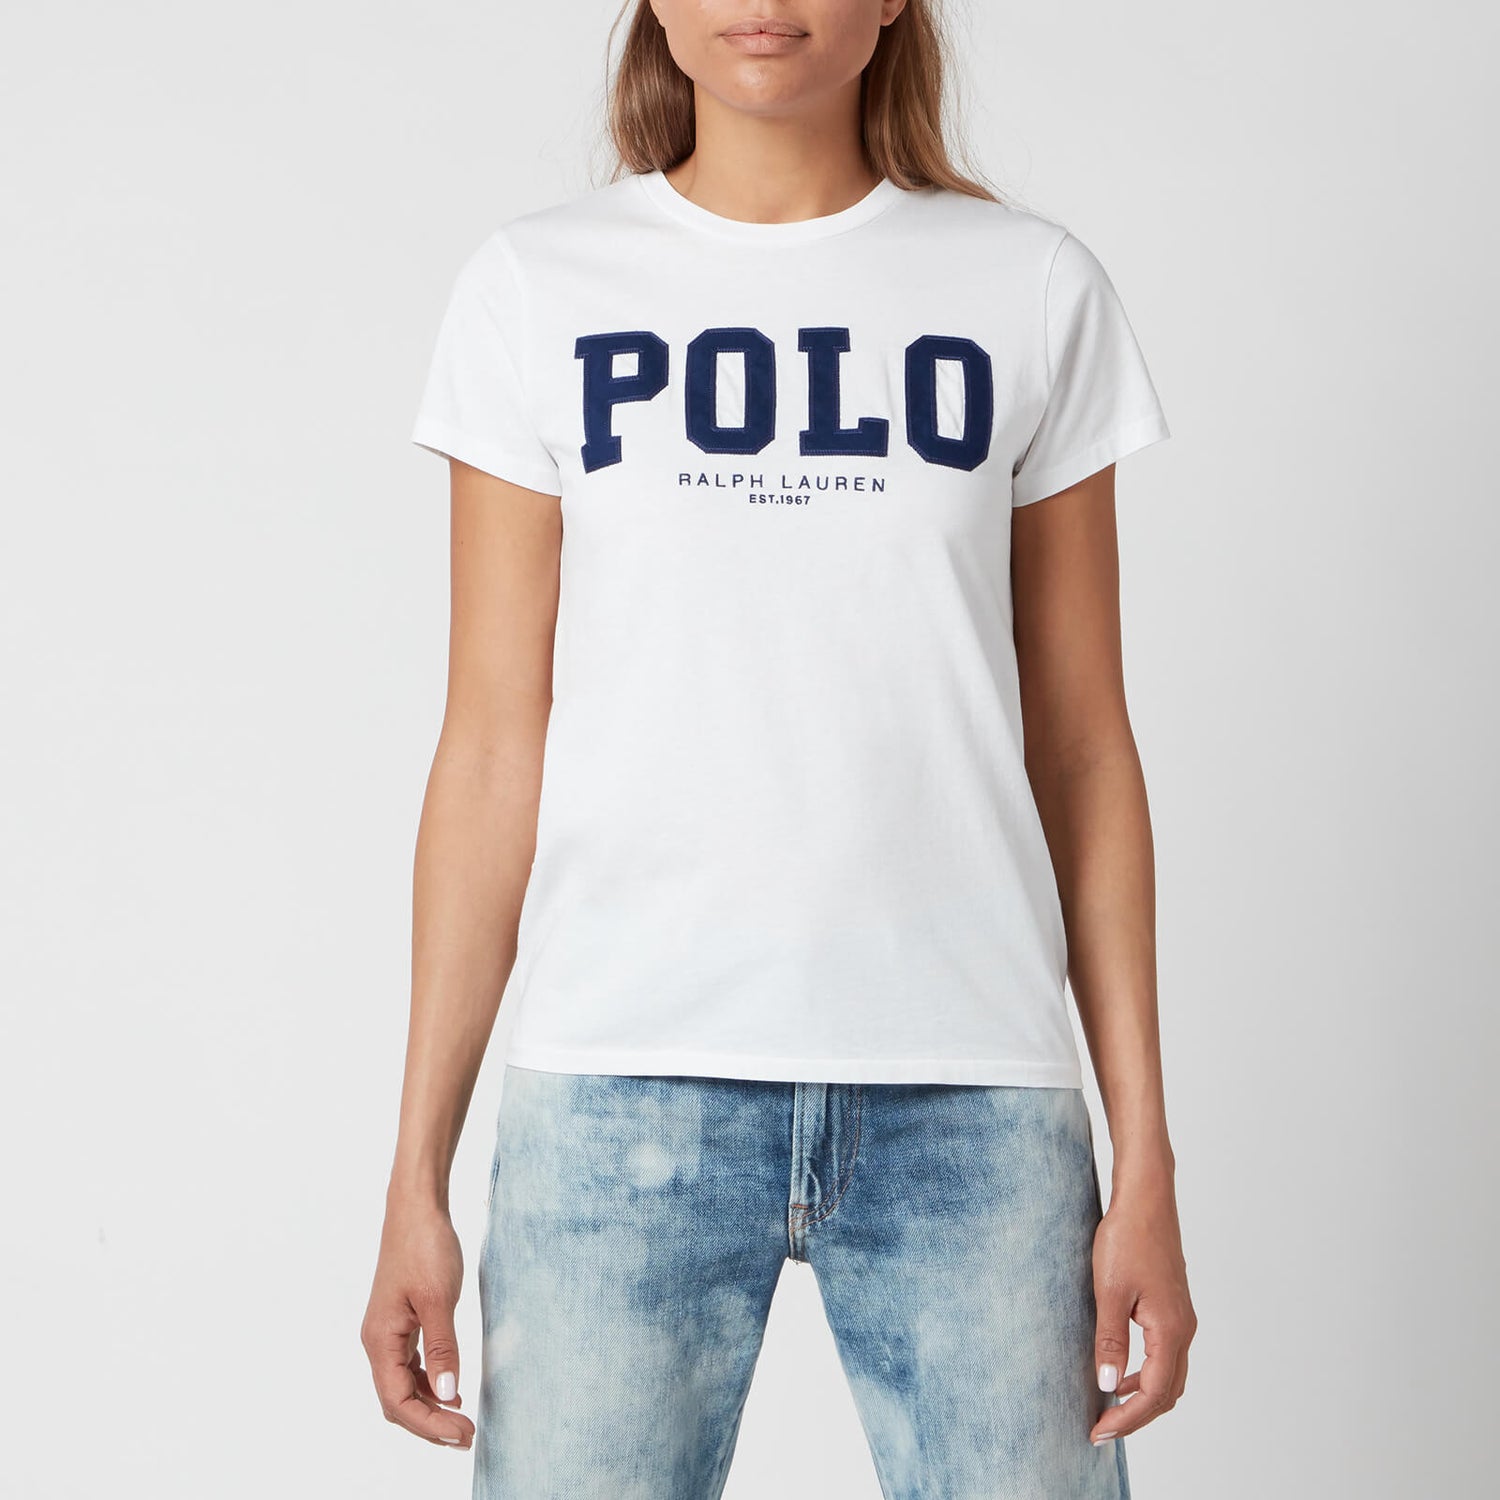 Polo Ralph Lauren Women's Polo Logo T-Shirt - White | TheHut.com